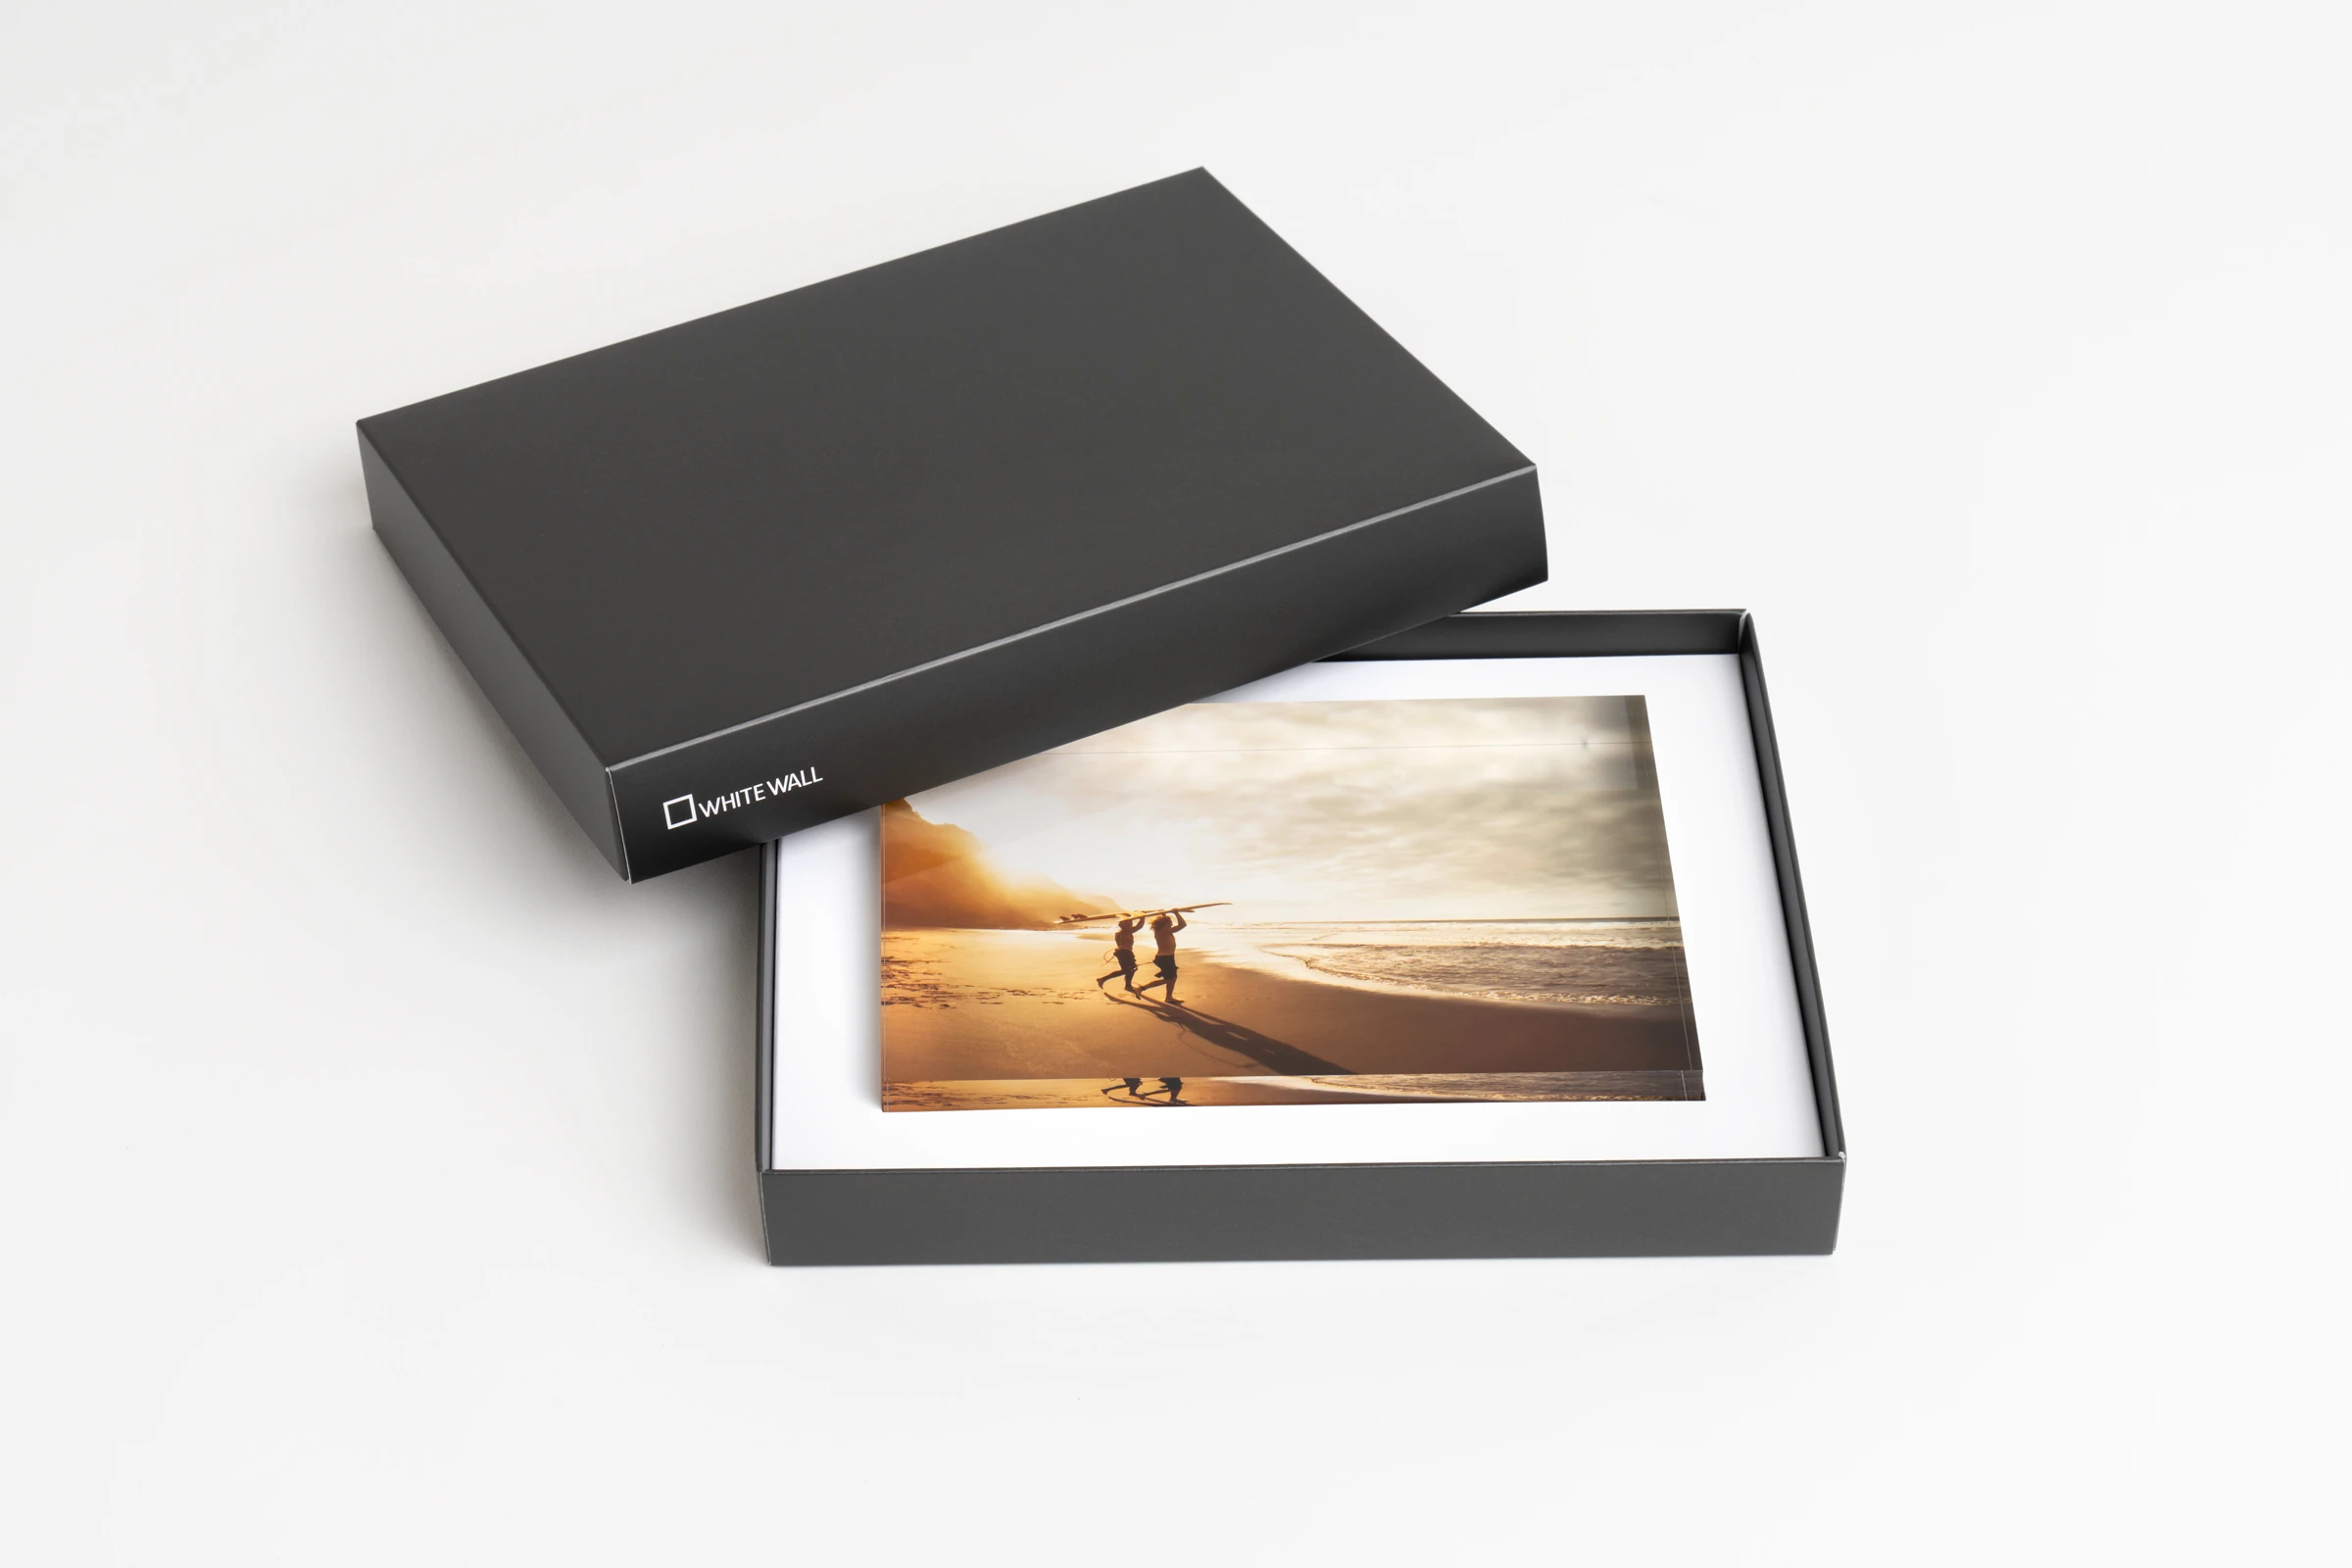 acrylic photo block lying in a black whitewall gift box.